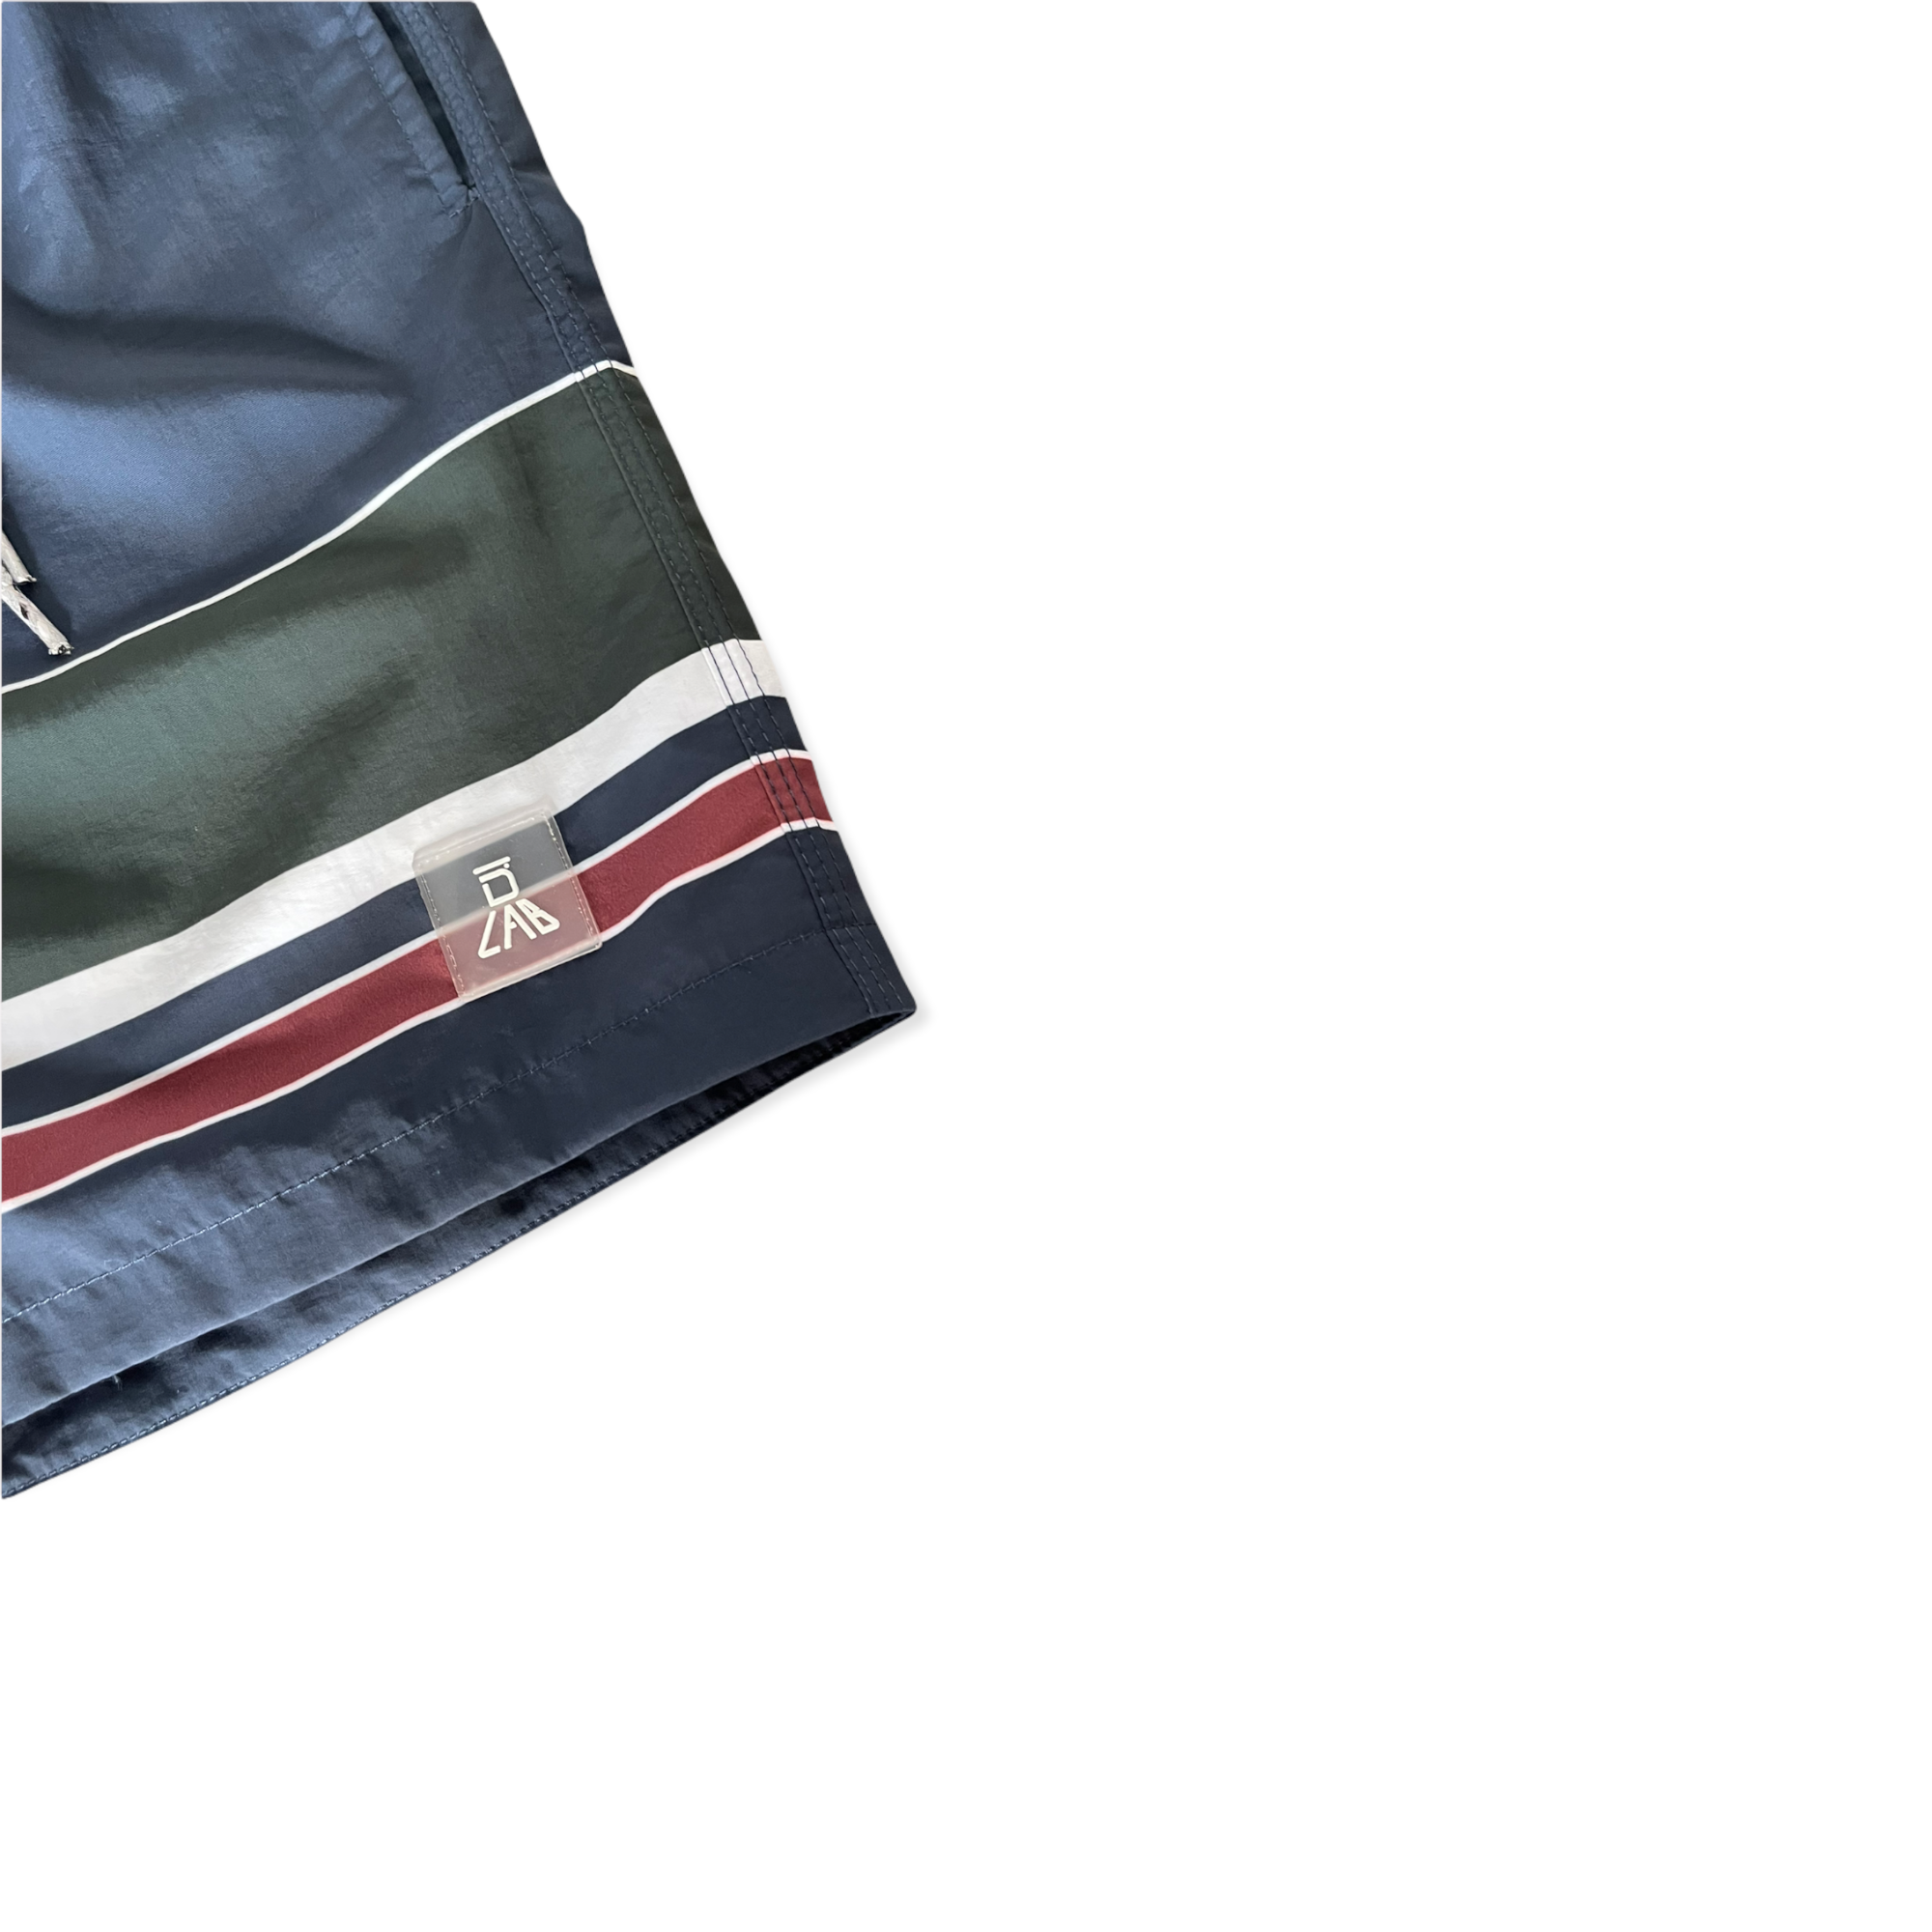 DLAB Men's Hybrid Board Shorts (Navy-Sublimated Lines)